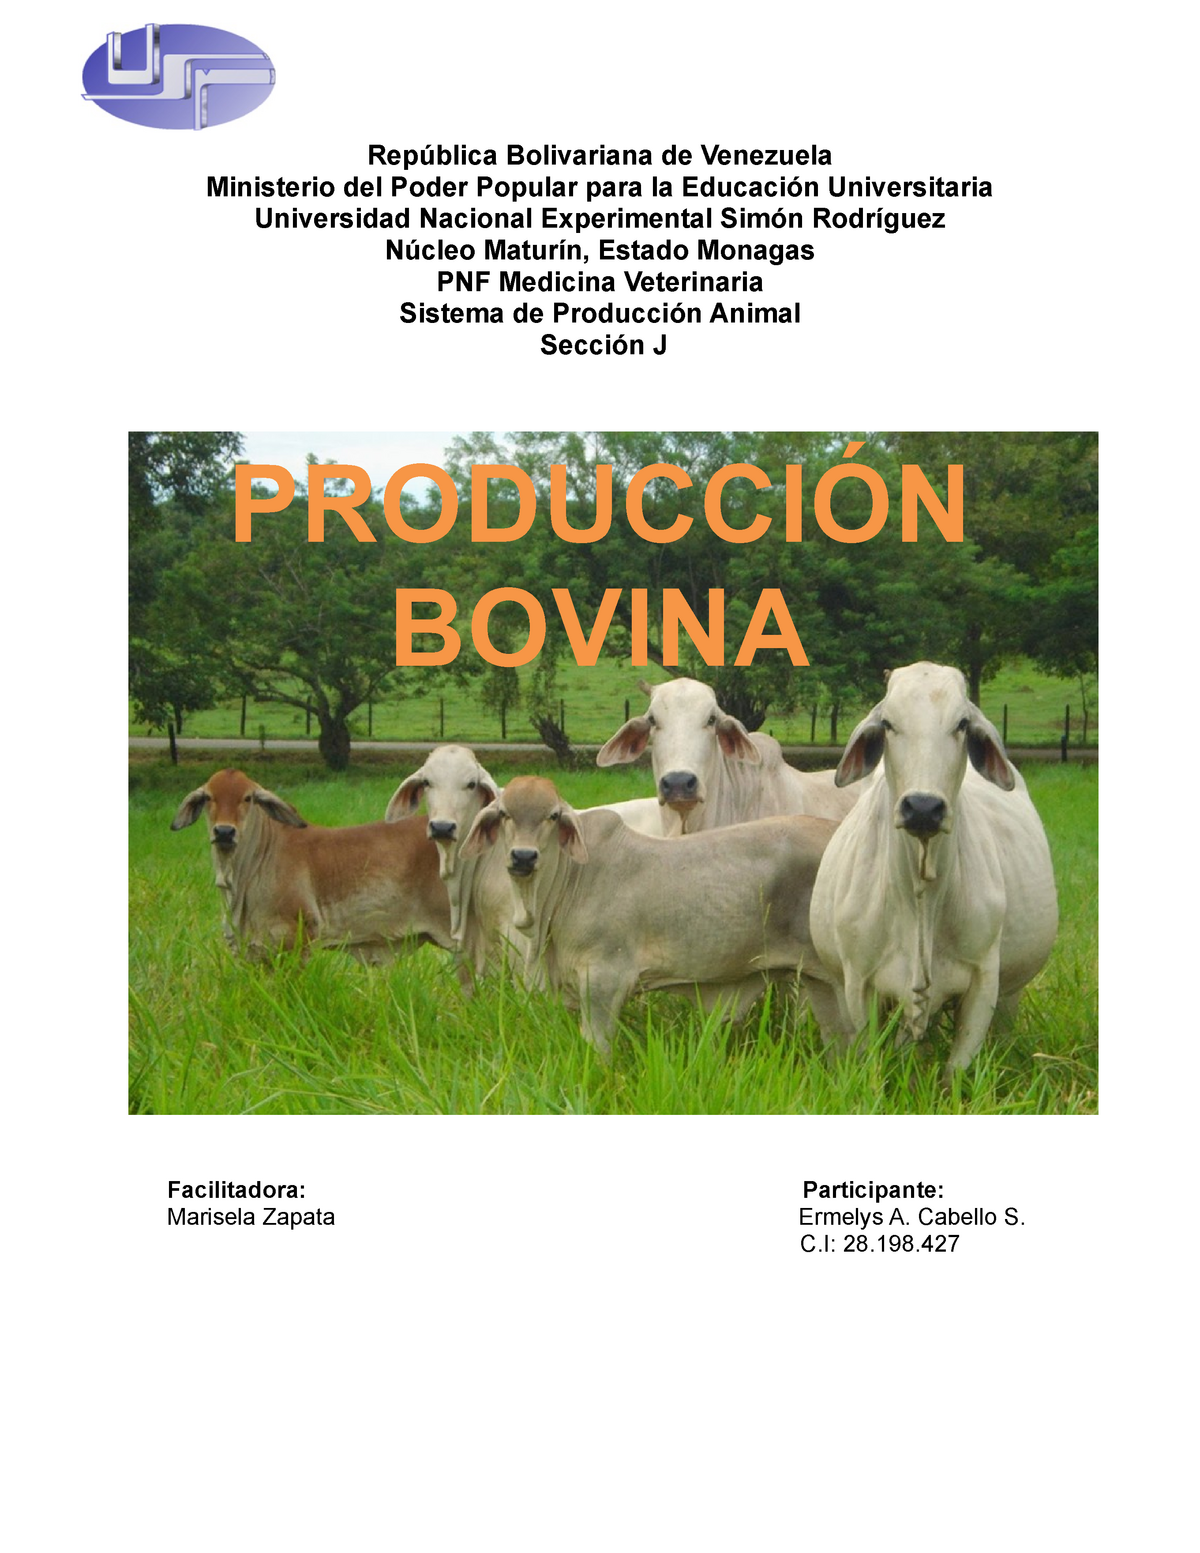 bovinos produccion - República Bolivariana de Venezuela Ministerio del  Poder Popular para la - Studocu